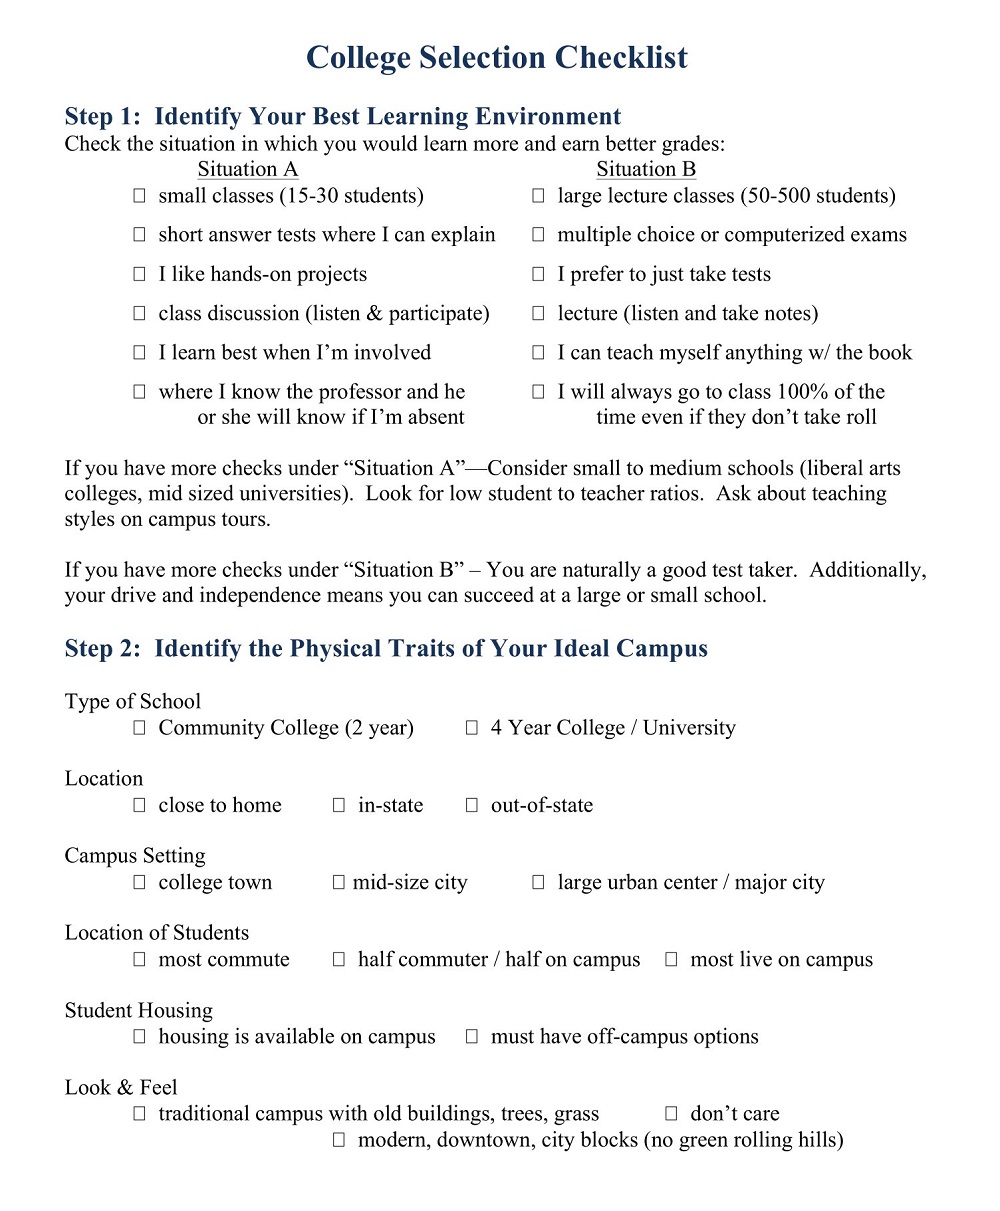 College Selection Checklist Sample